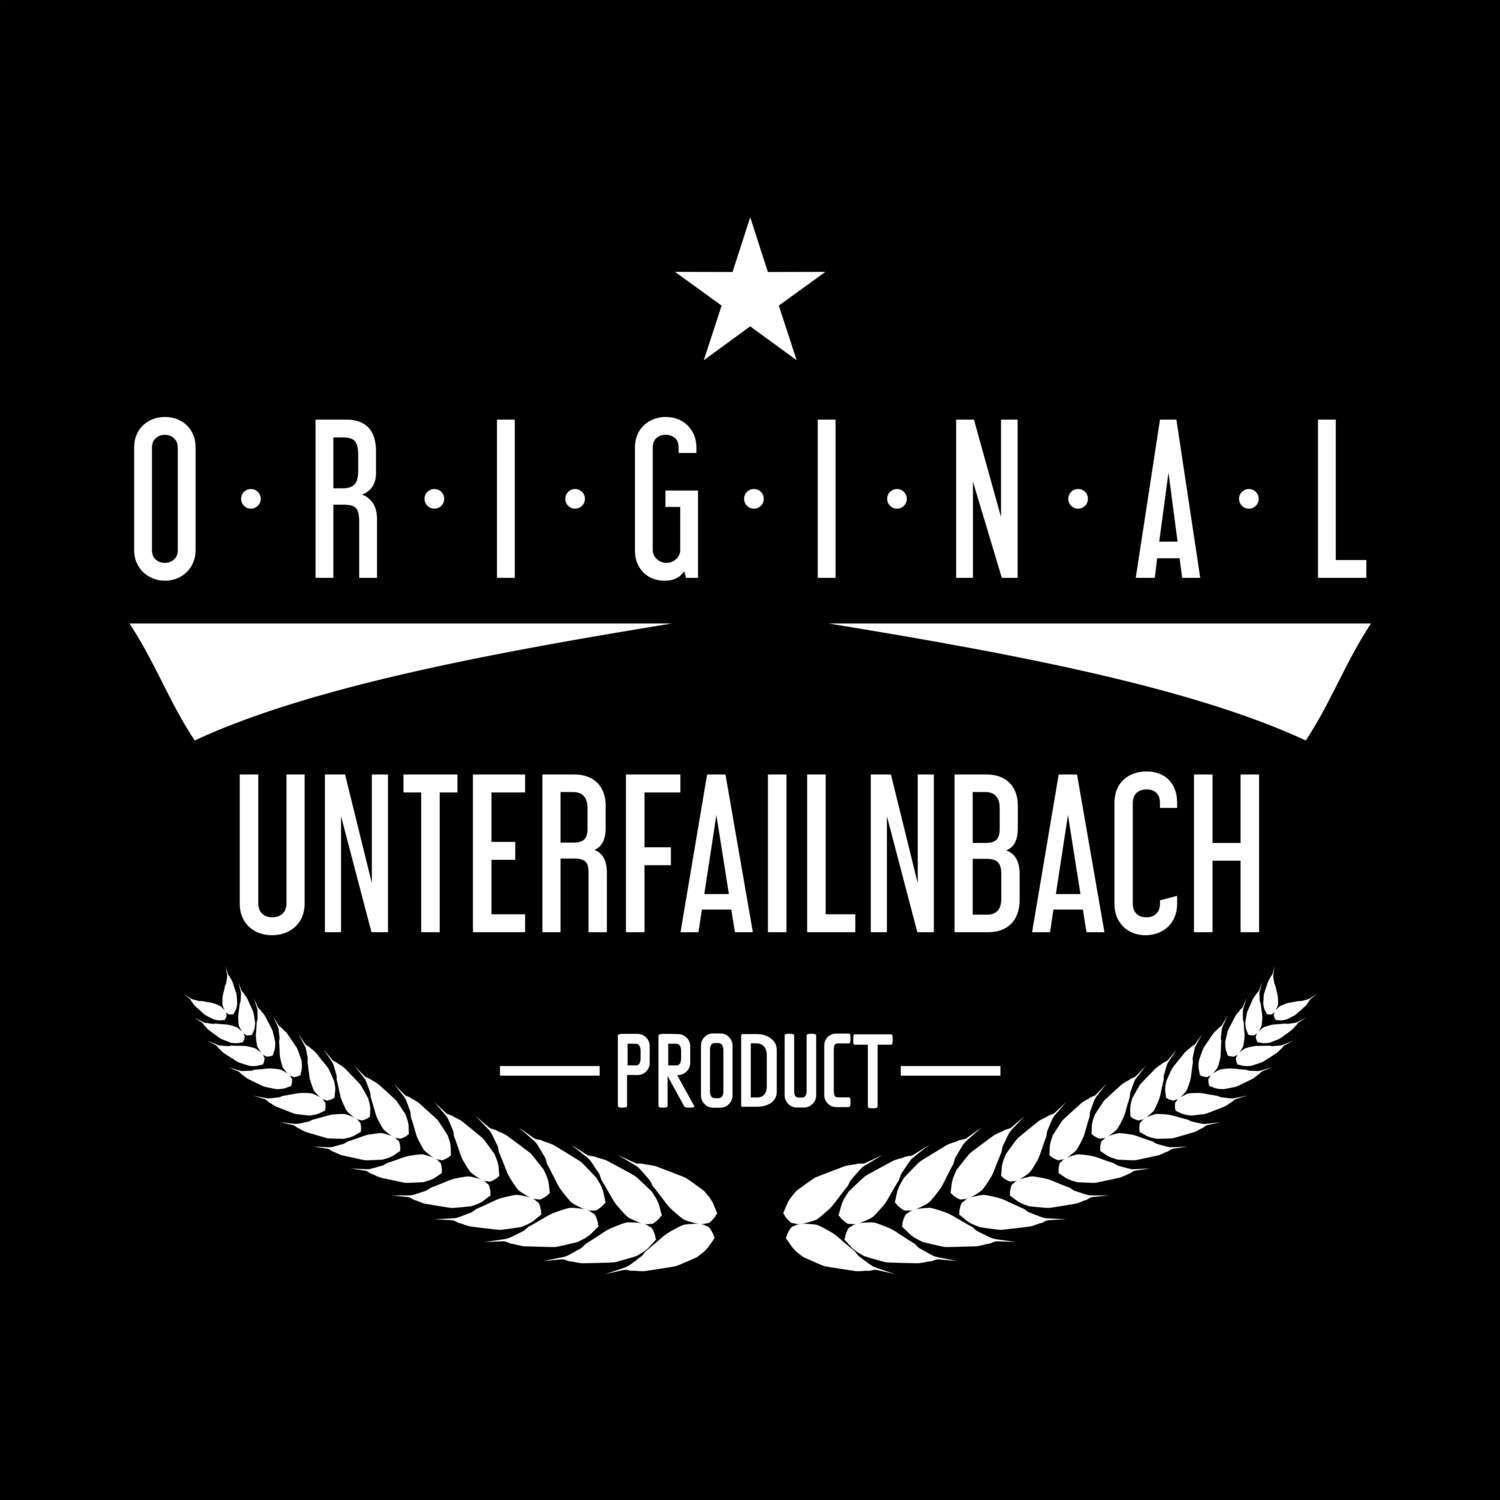 Unterfailnbach T-Shirt »Original Product«